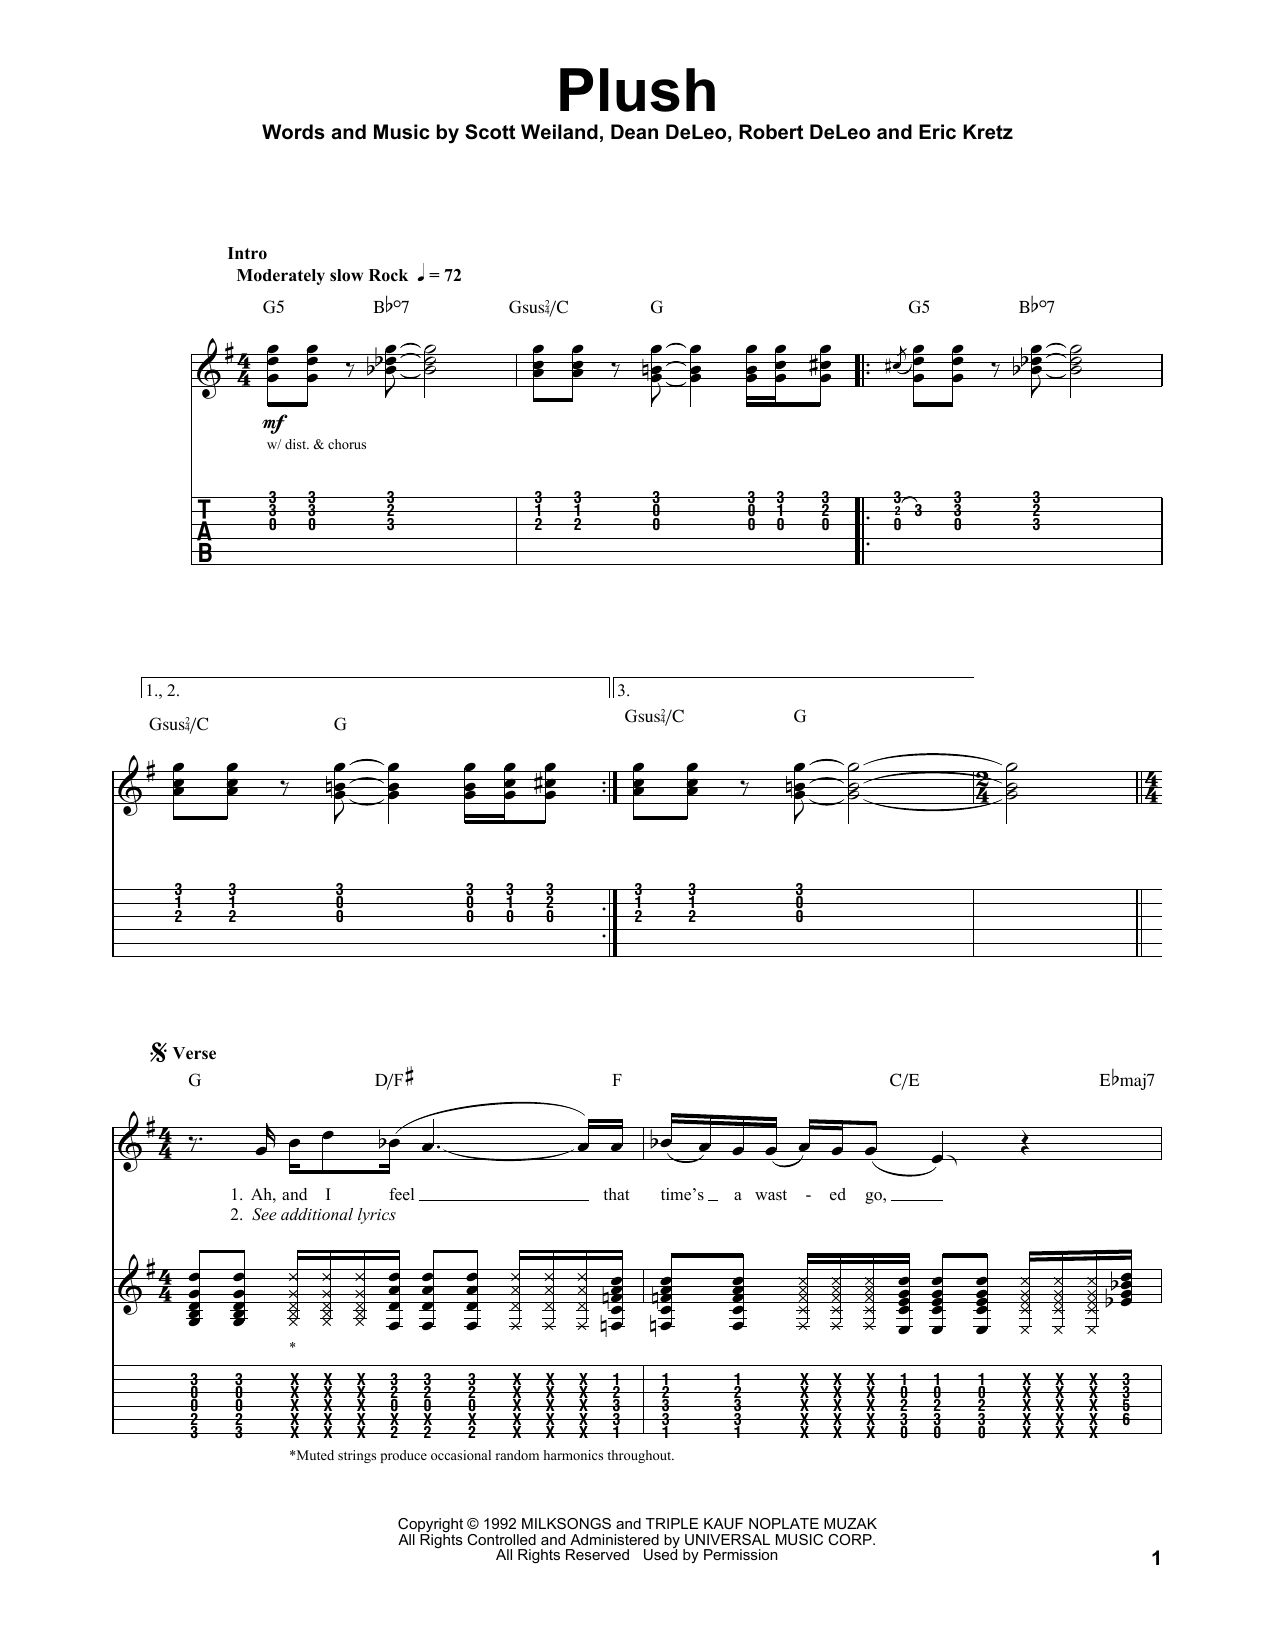 Stone Temple Pilots Plush Sheet Music Notes & Chords for Lyrics & Chords - Download or Print PDF